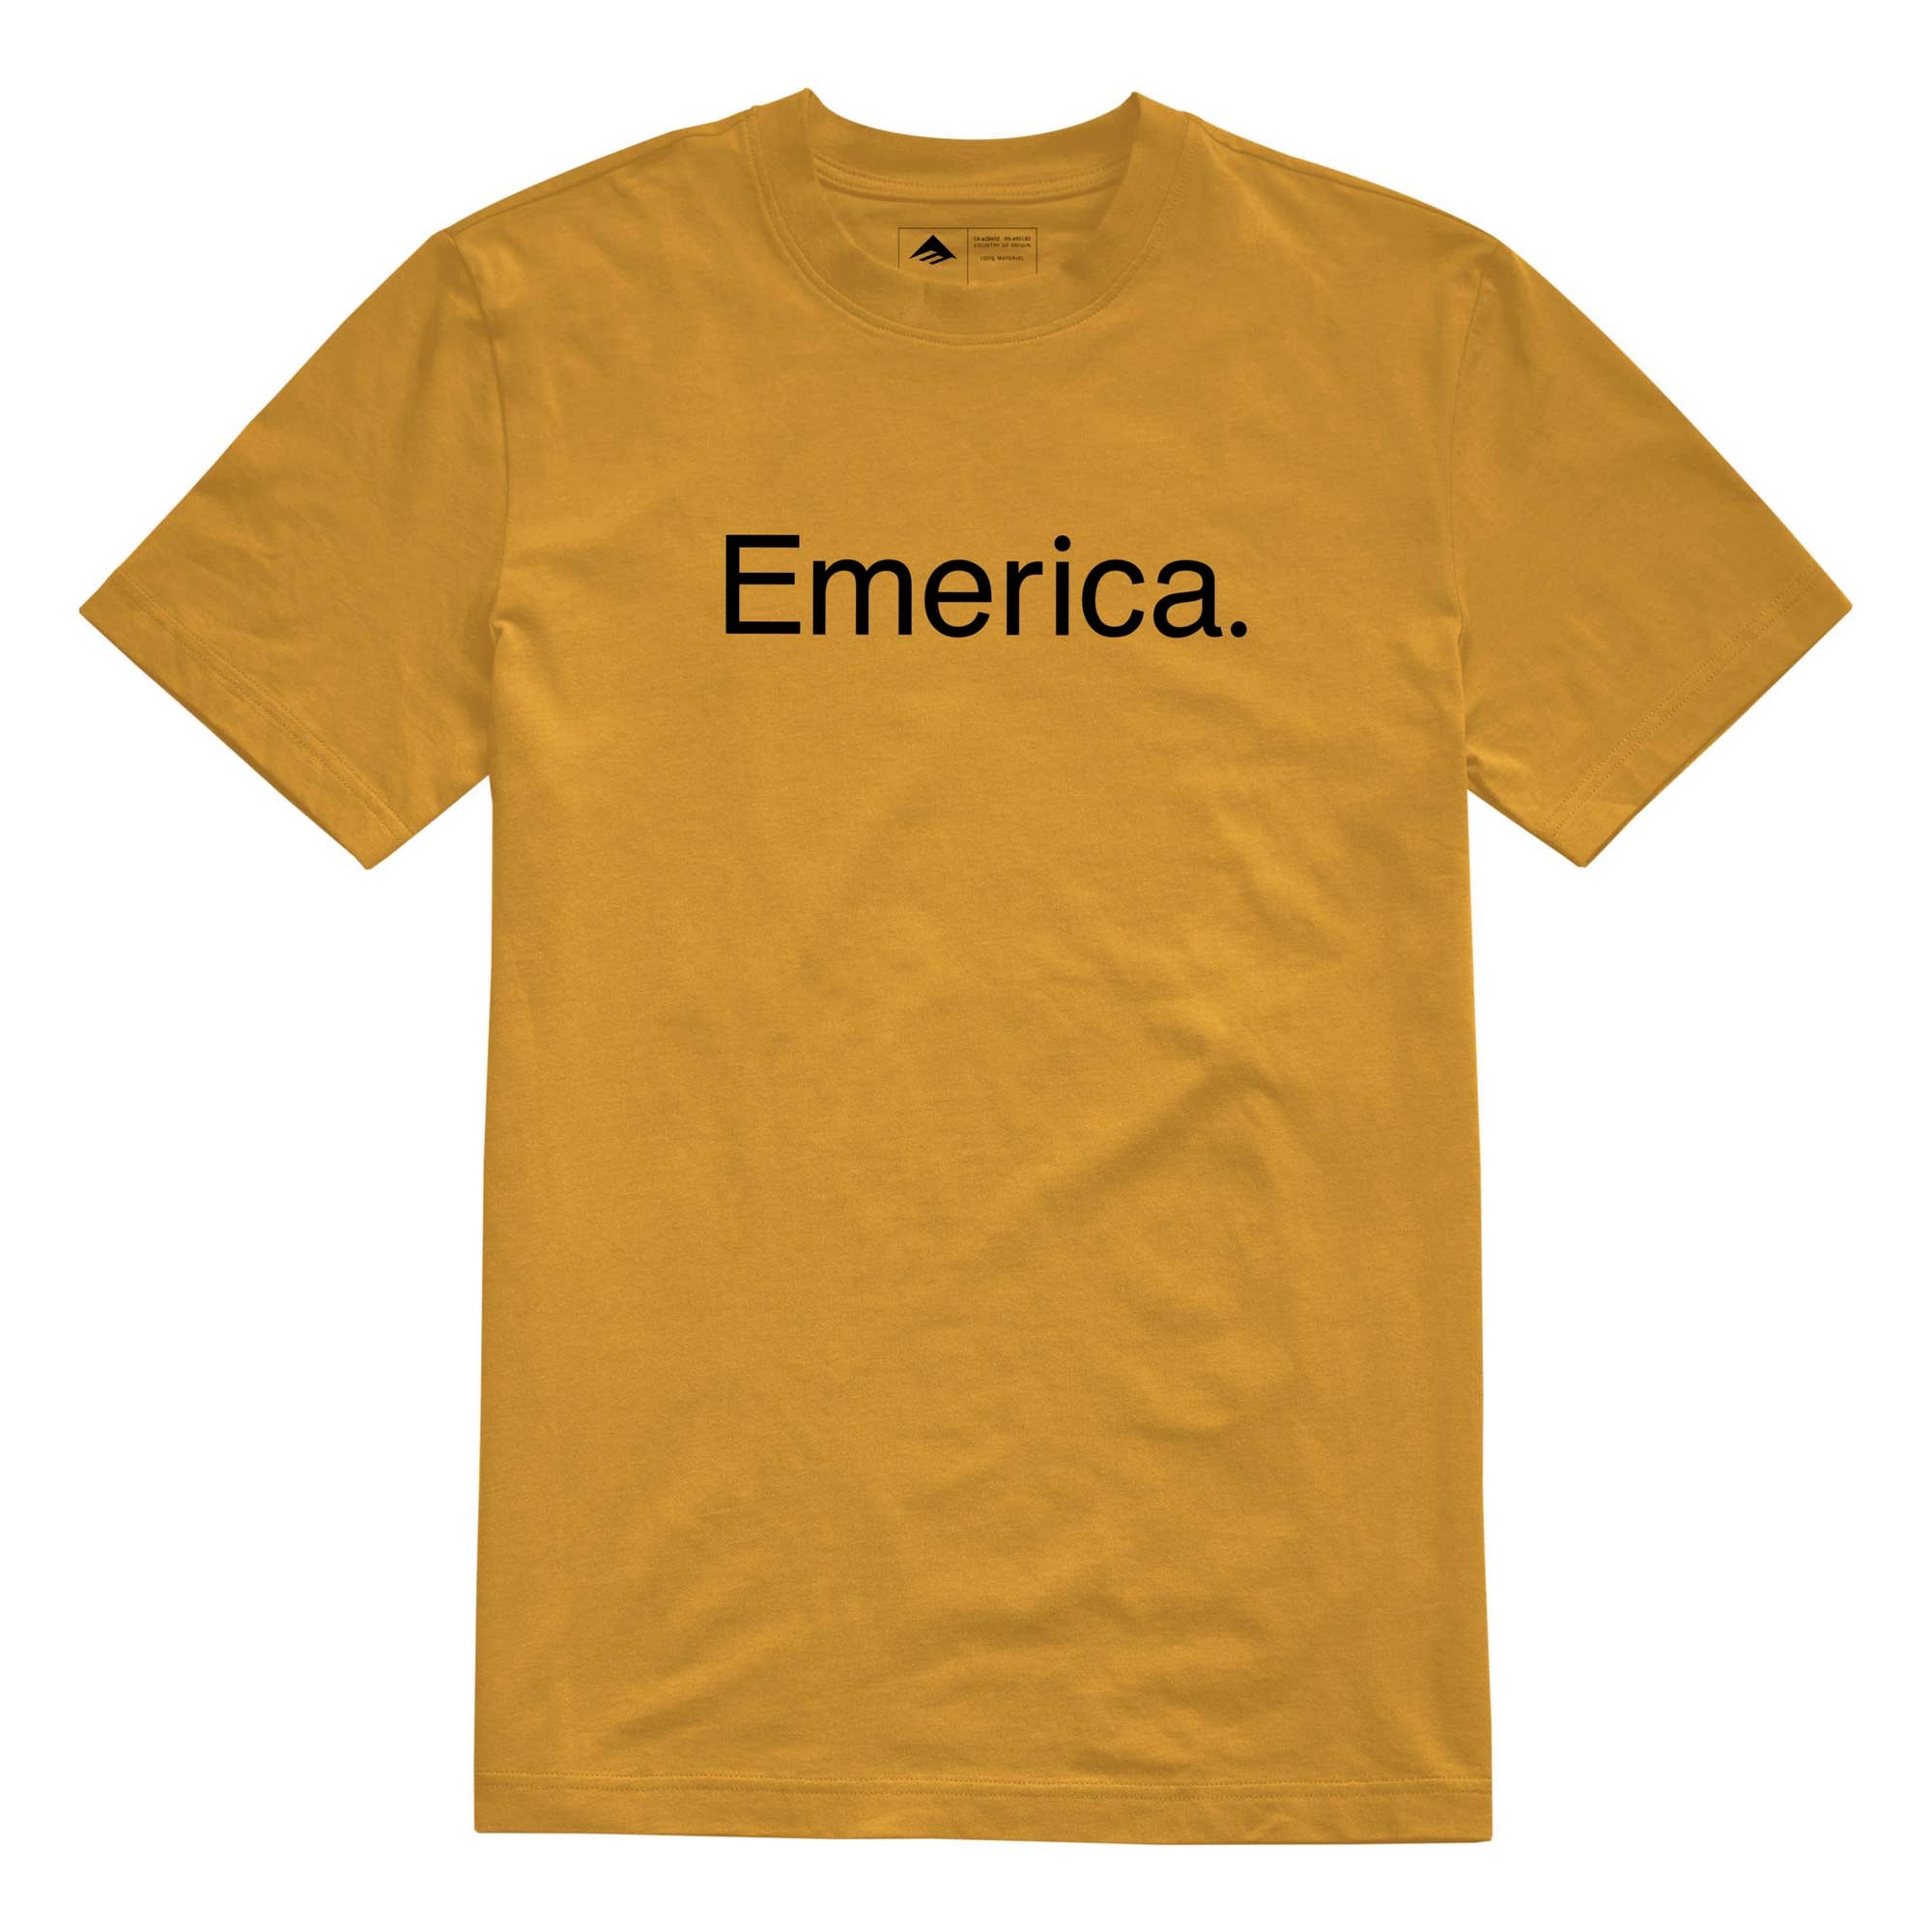 EMERICA T-Shirt PURE S/S gold